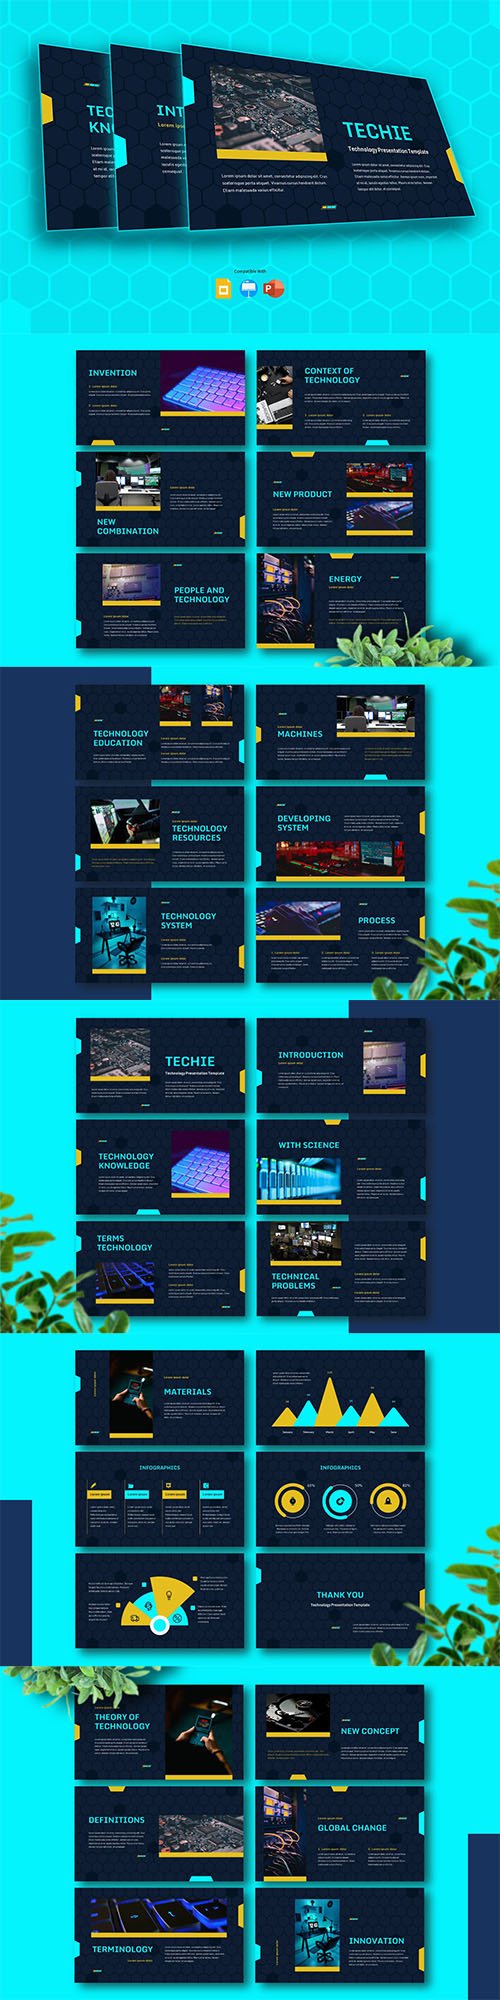 TECHIE - Technology Presentation Template